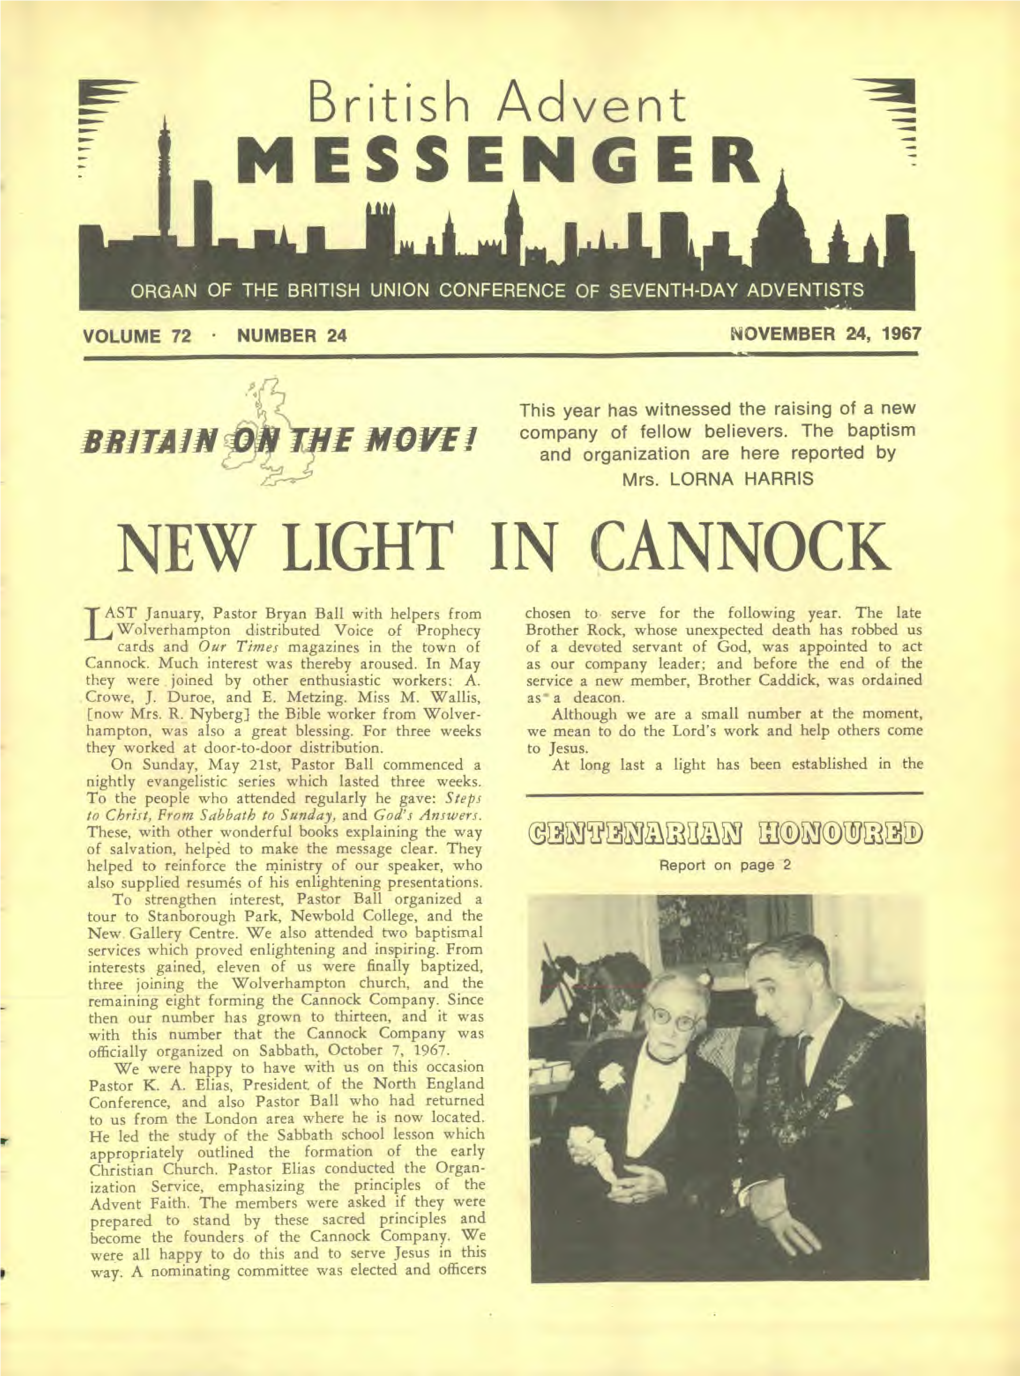 New Light in Cannock